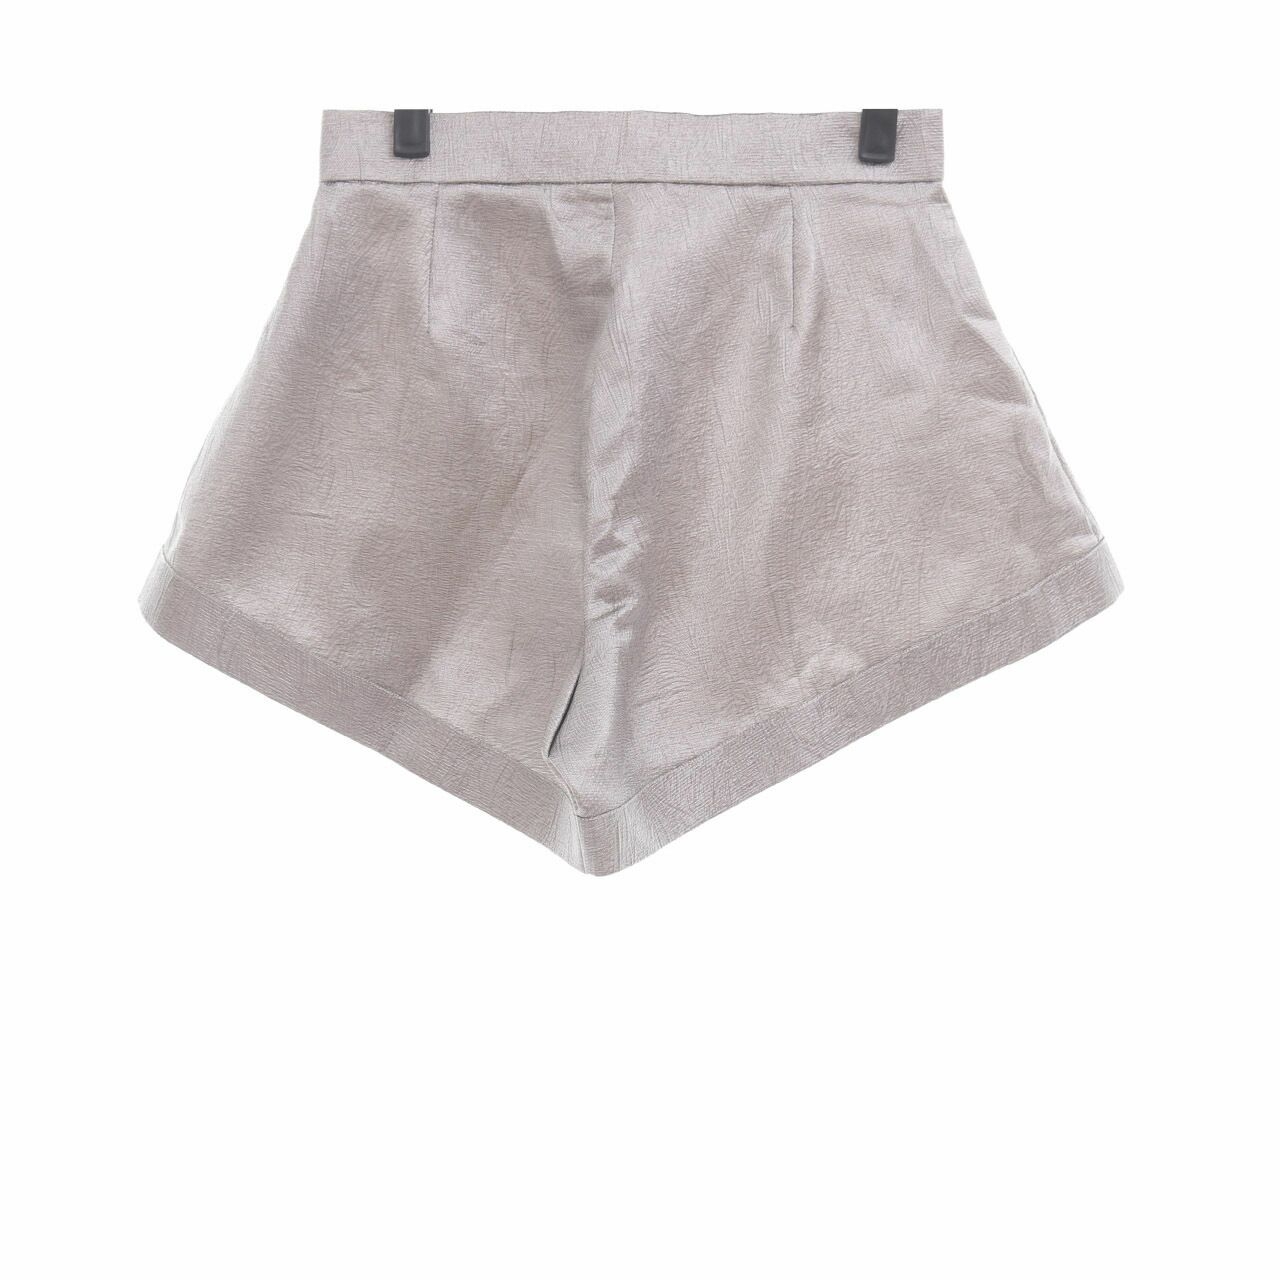 moorooah Silver Patterned Short Pants